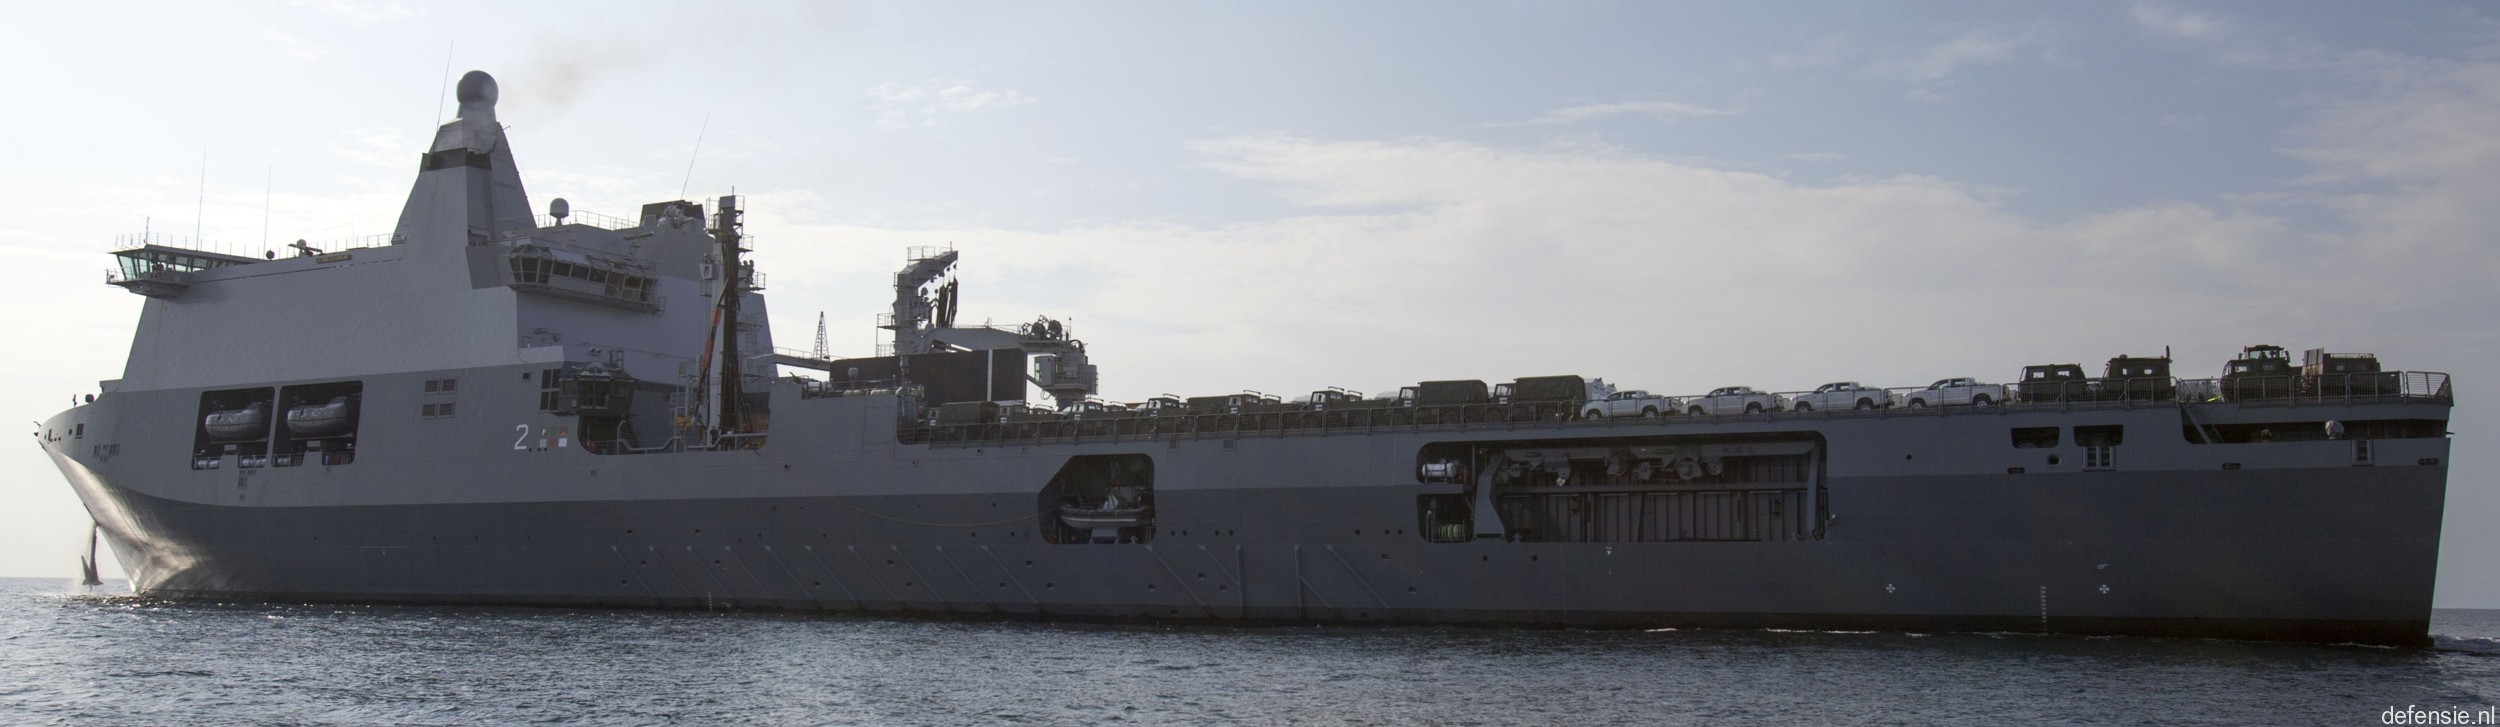 a-833 hnlms karel doorman joint support ship royal netherlands navy koninklijke marine 46